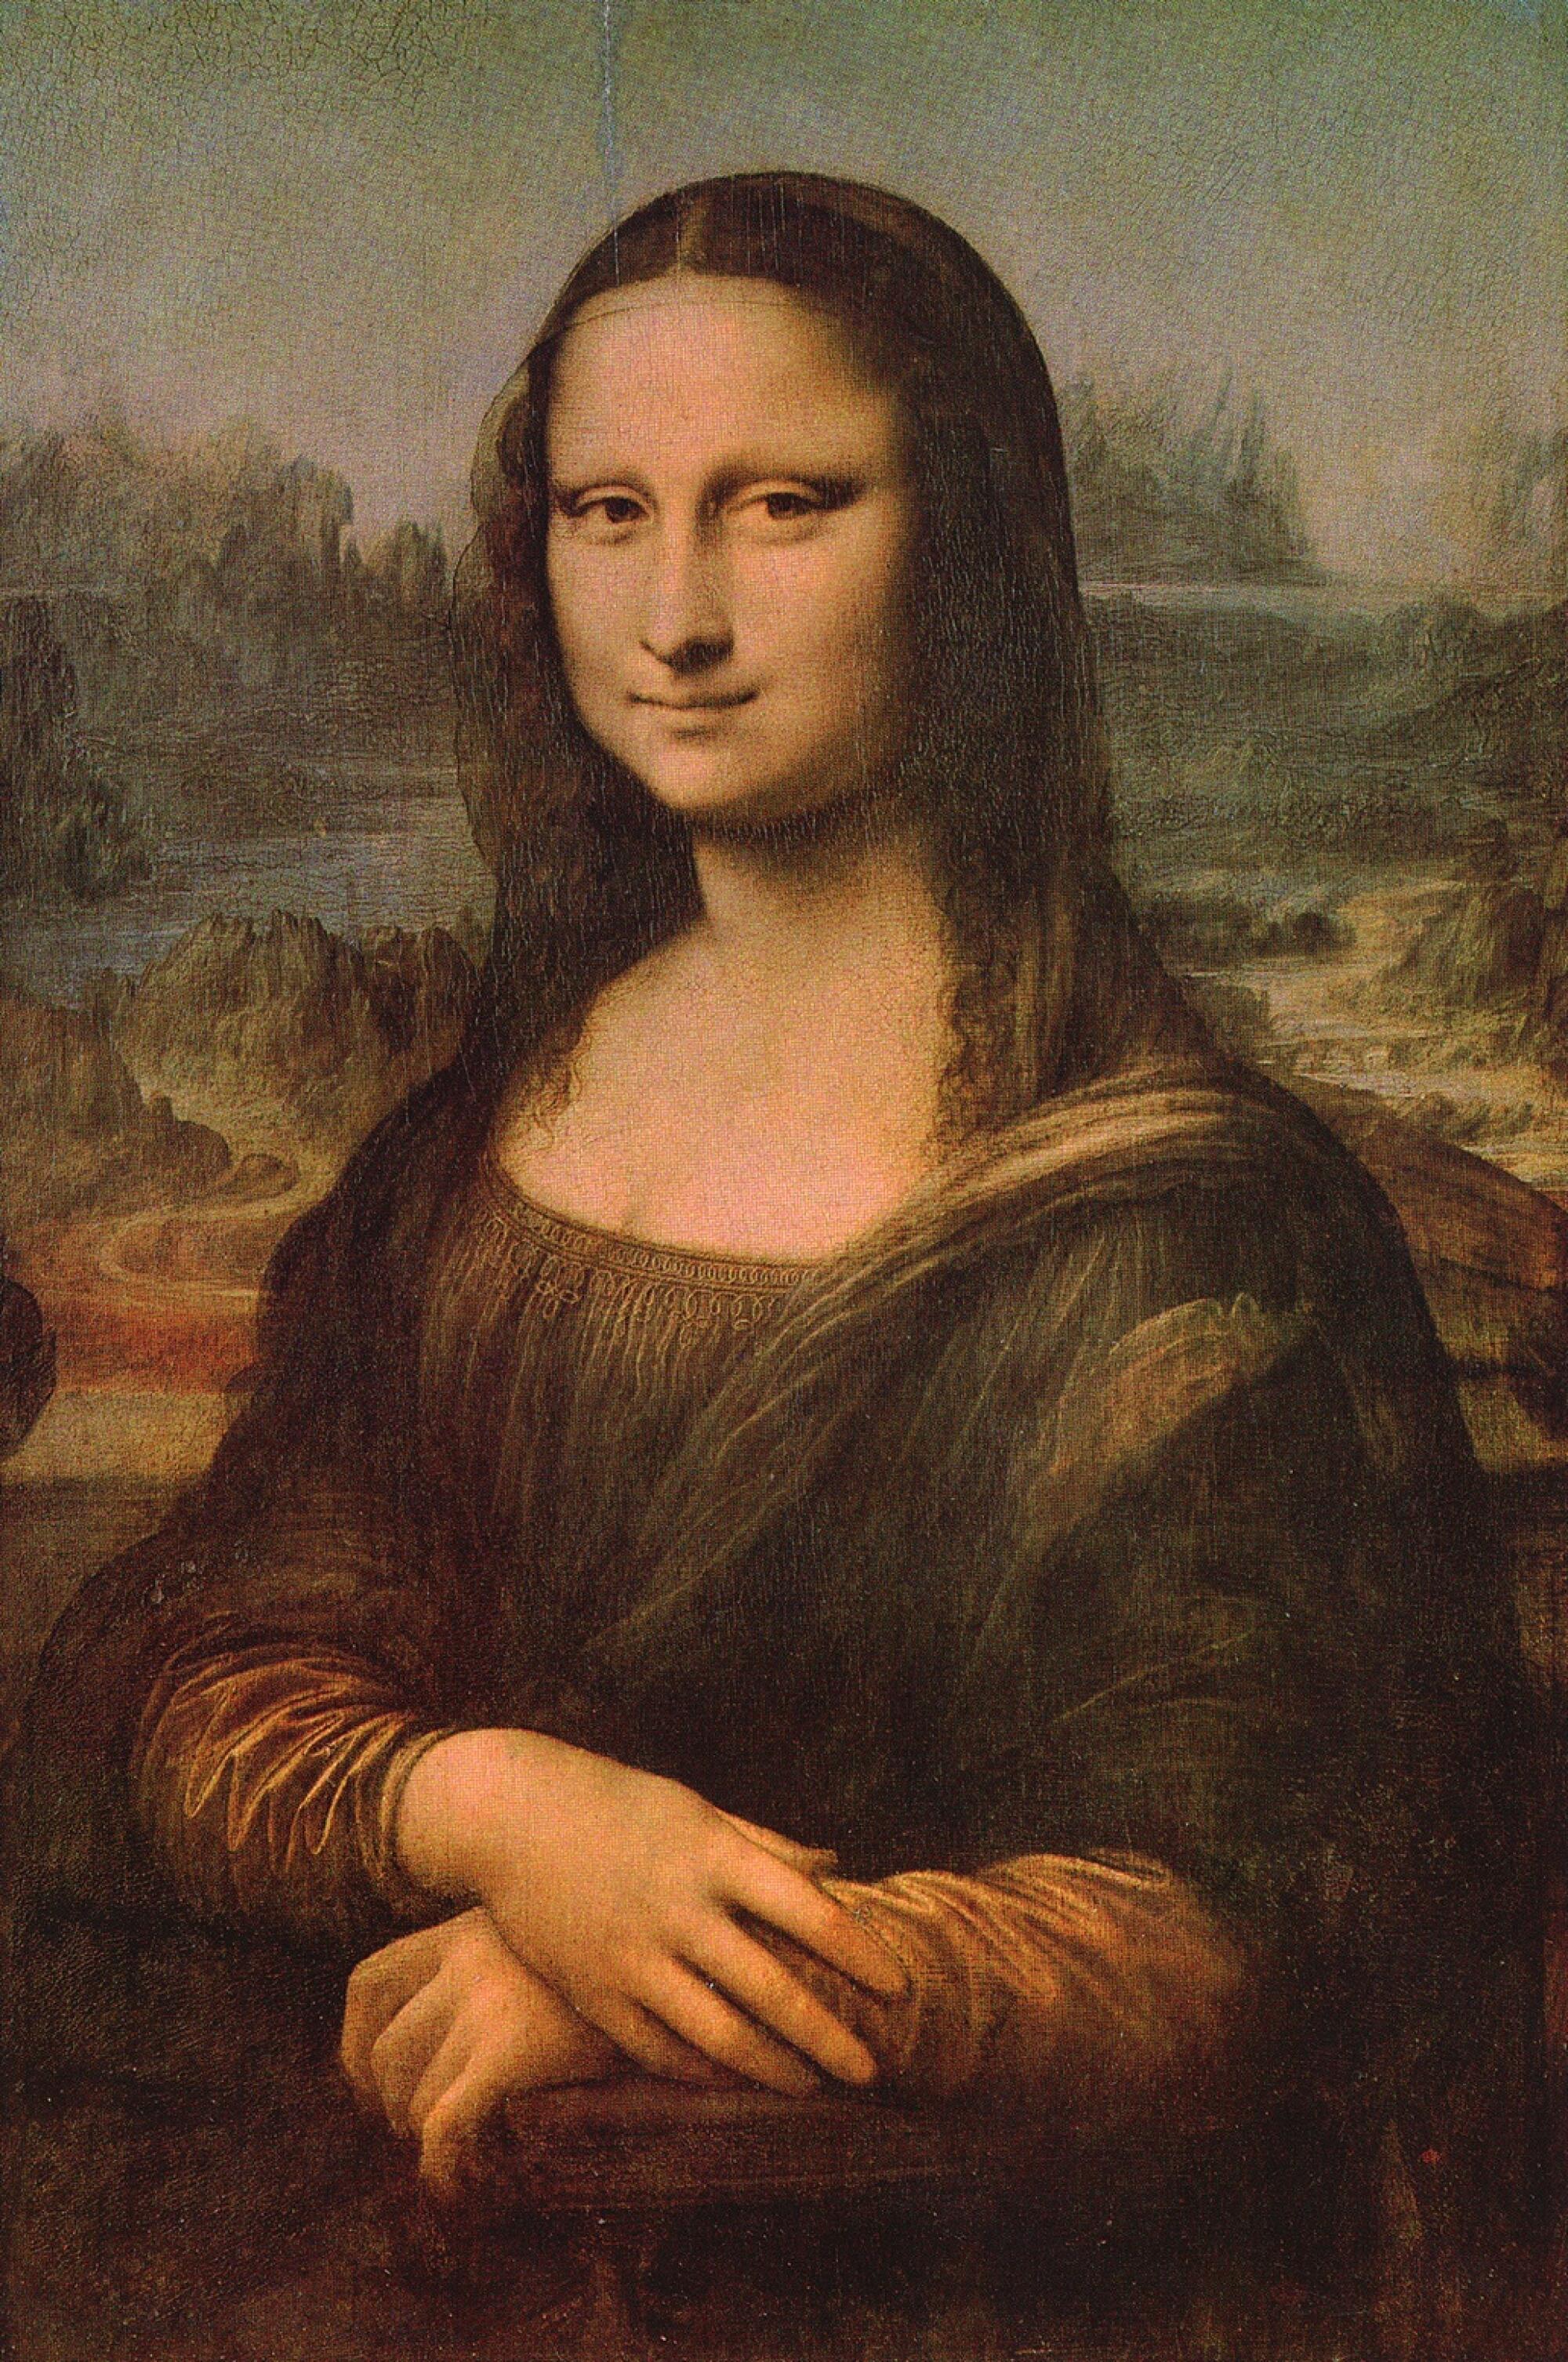 The "Mona Lisa"